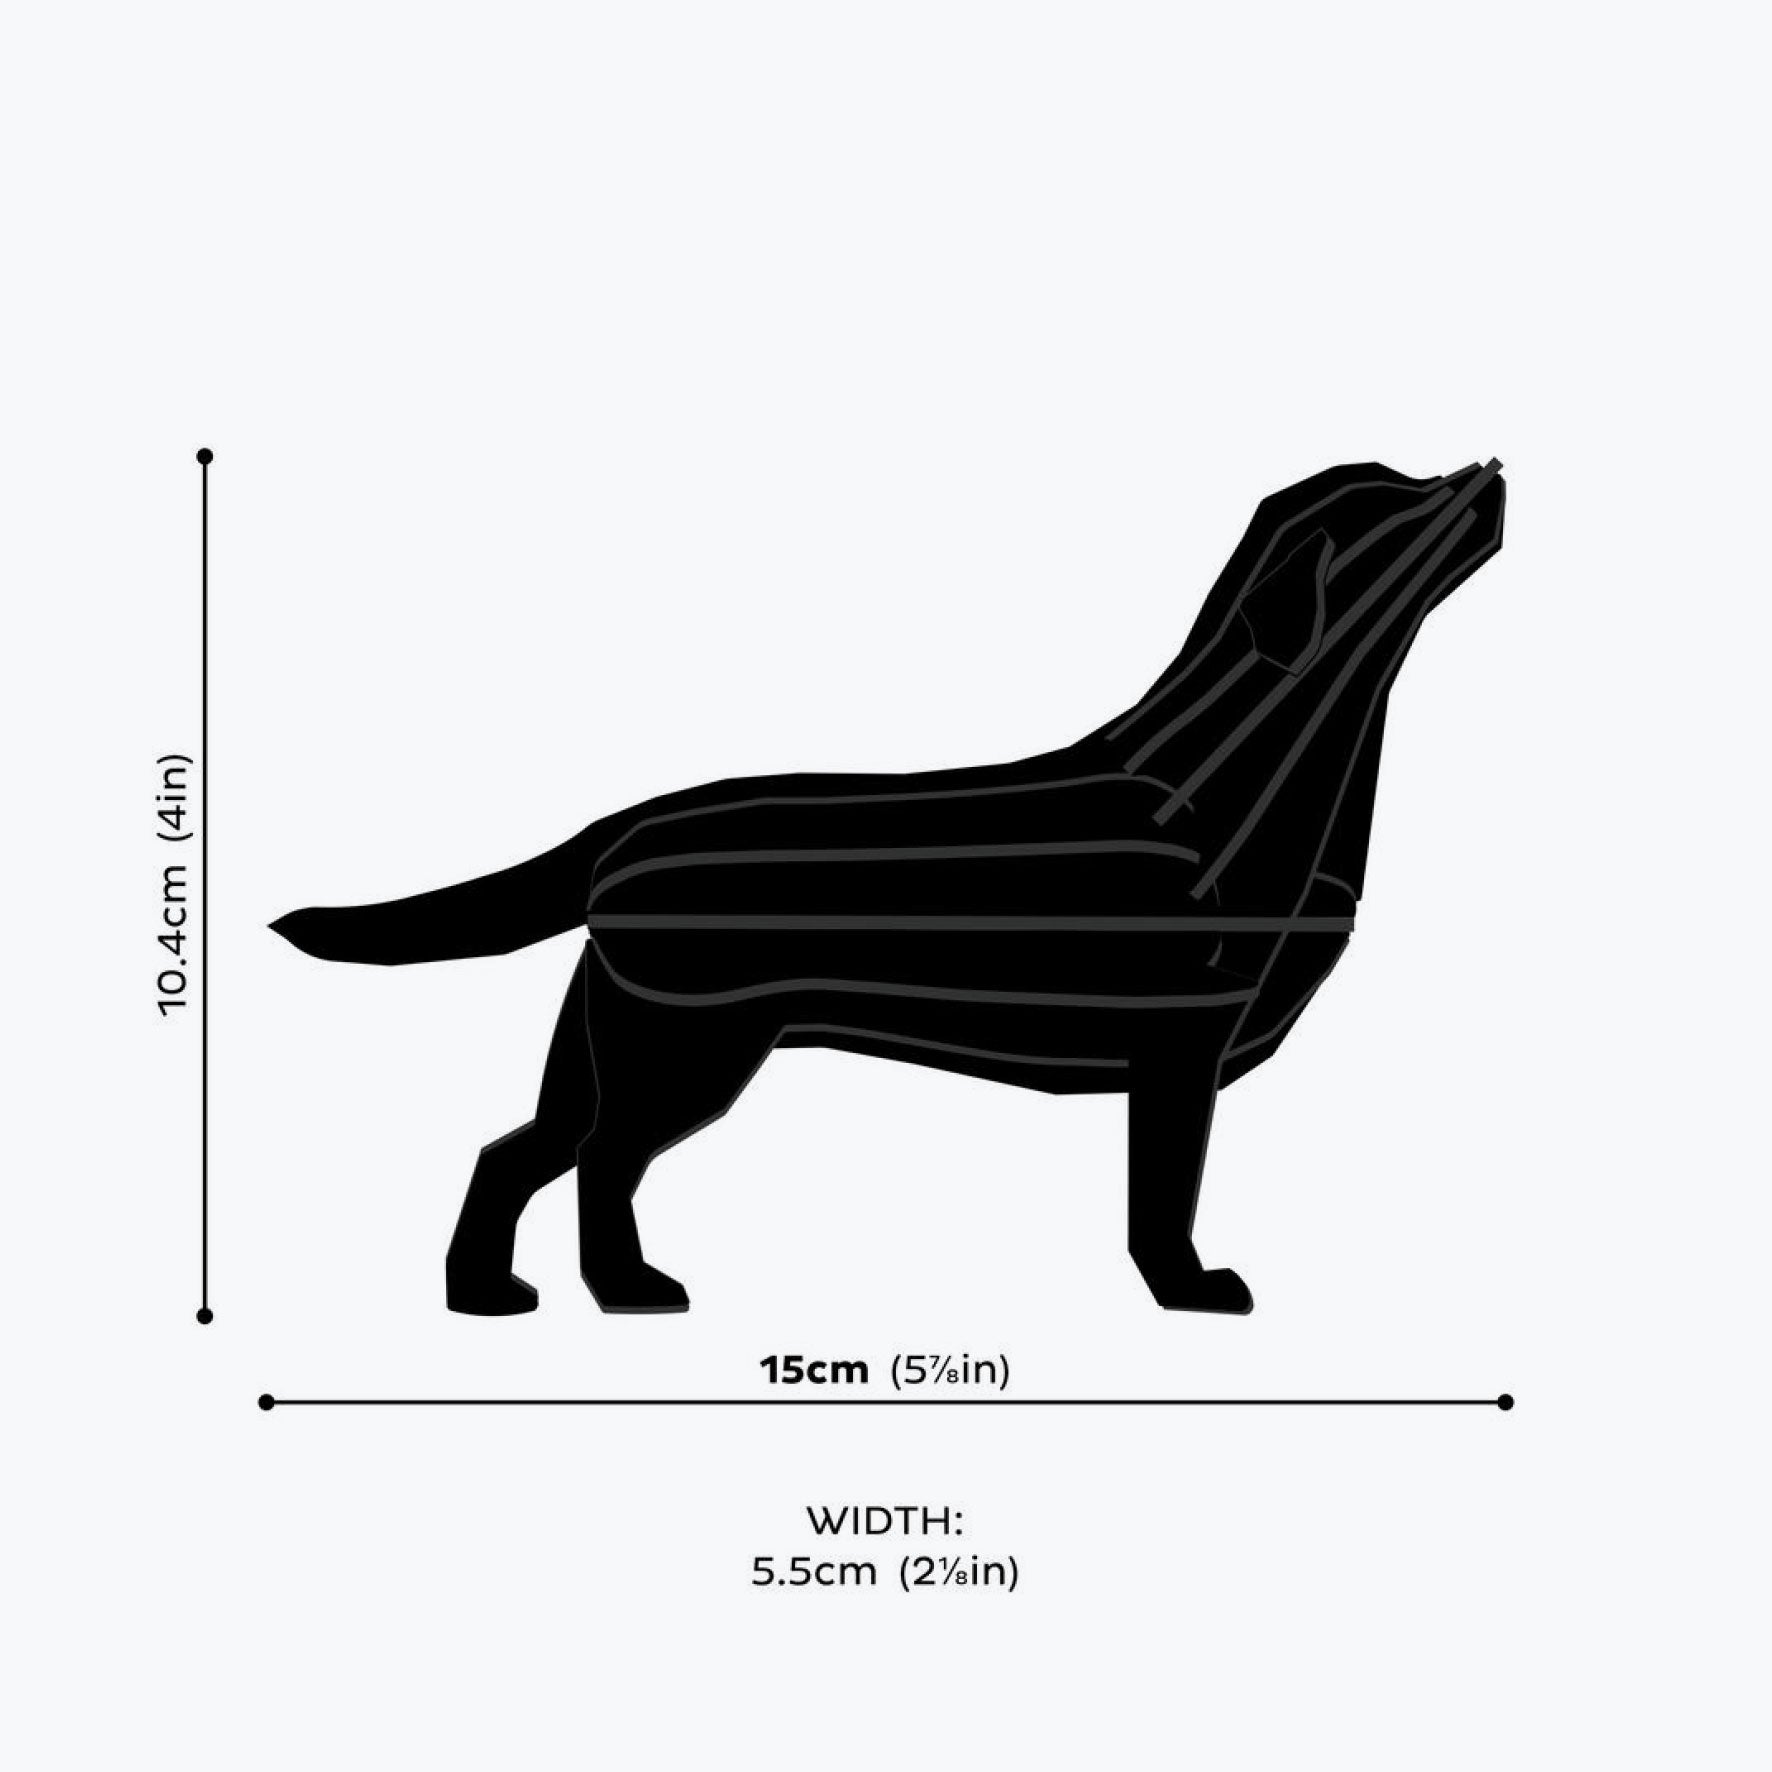 Lovi - Ornament - Labrador - 15cm - Black